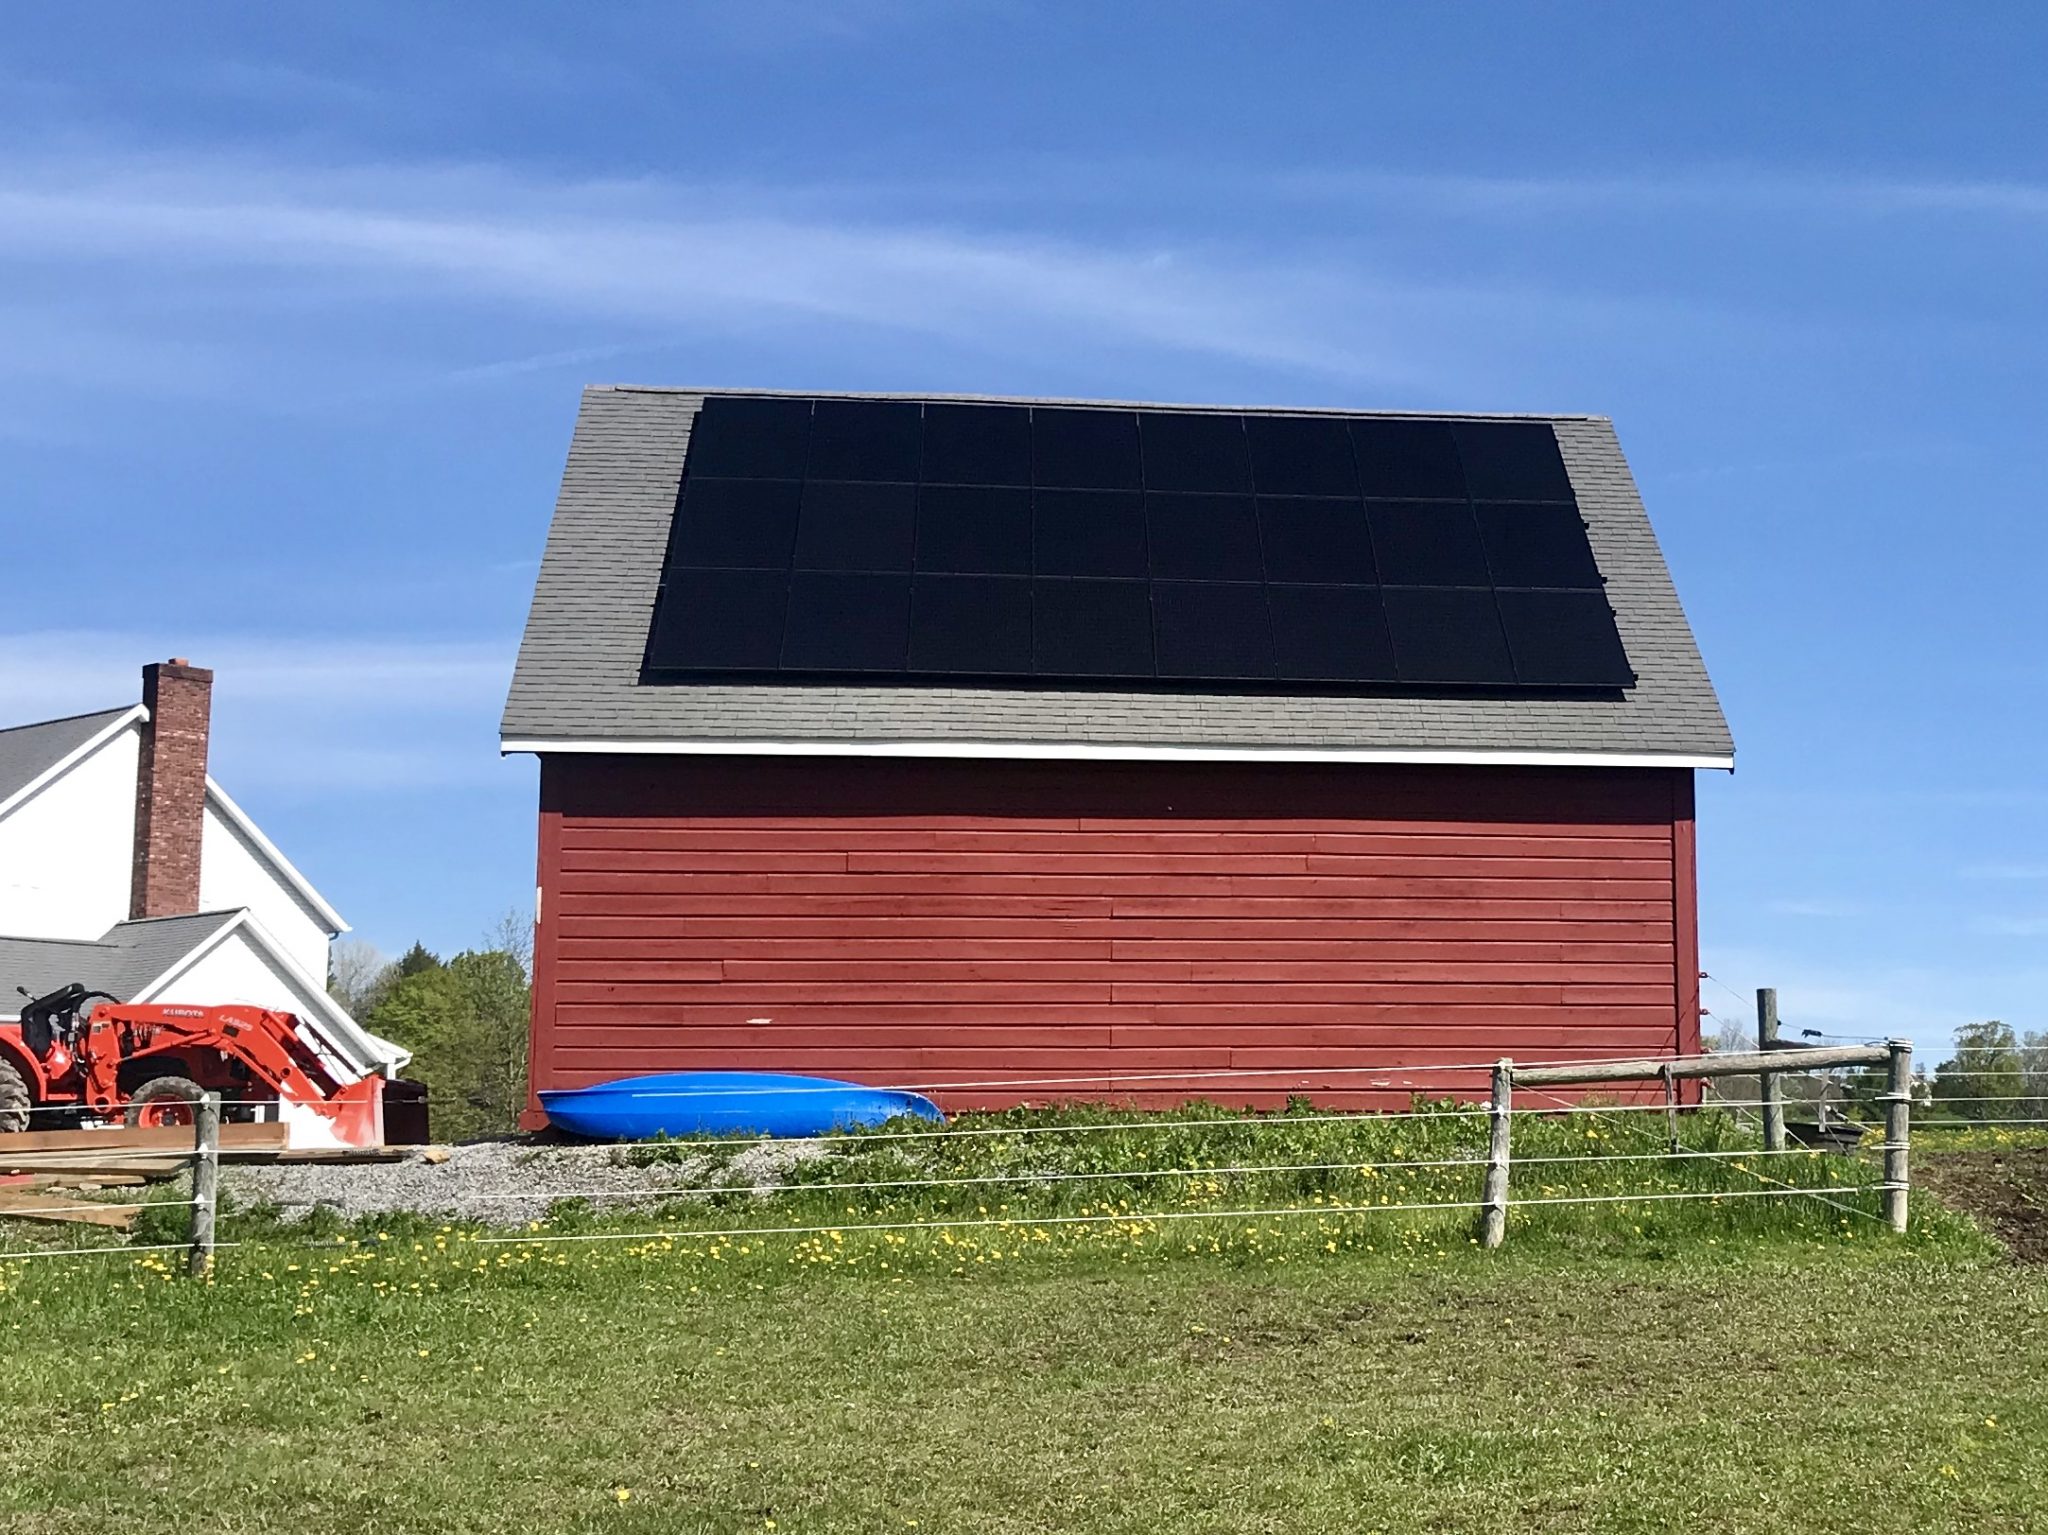 craig-blevens-rooftop-solar-panel-array